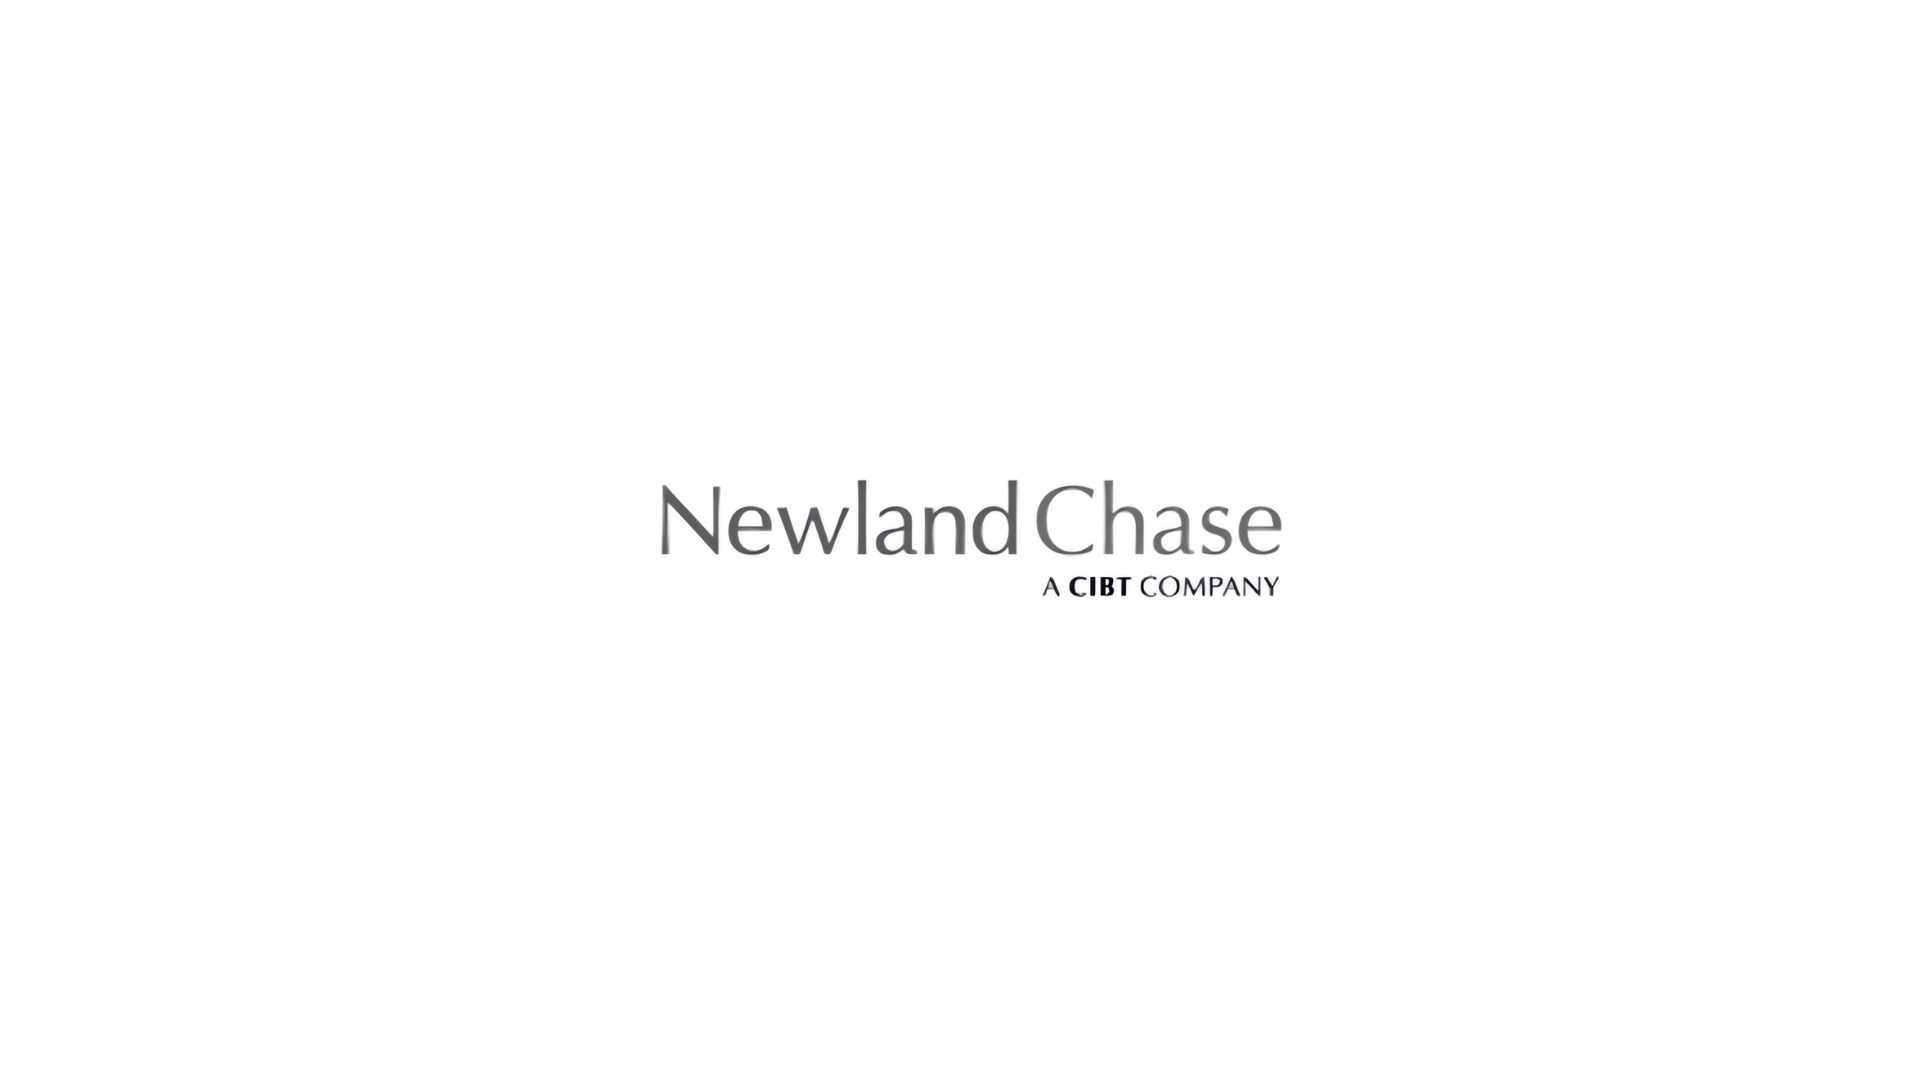 Newland Chase